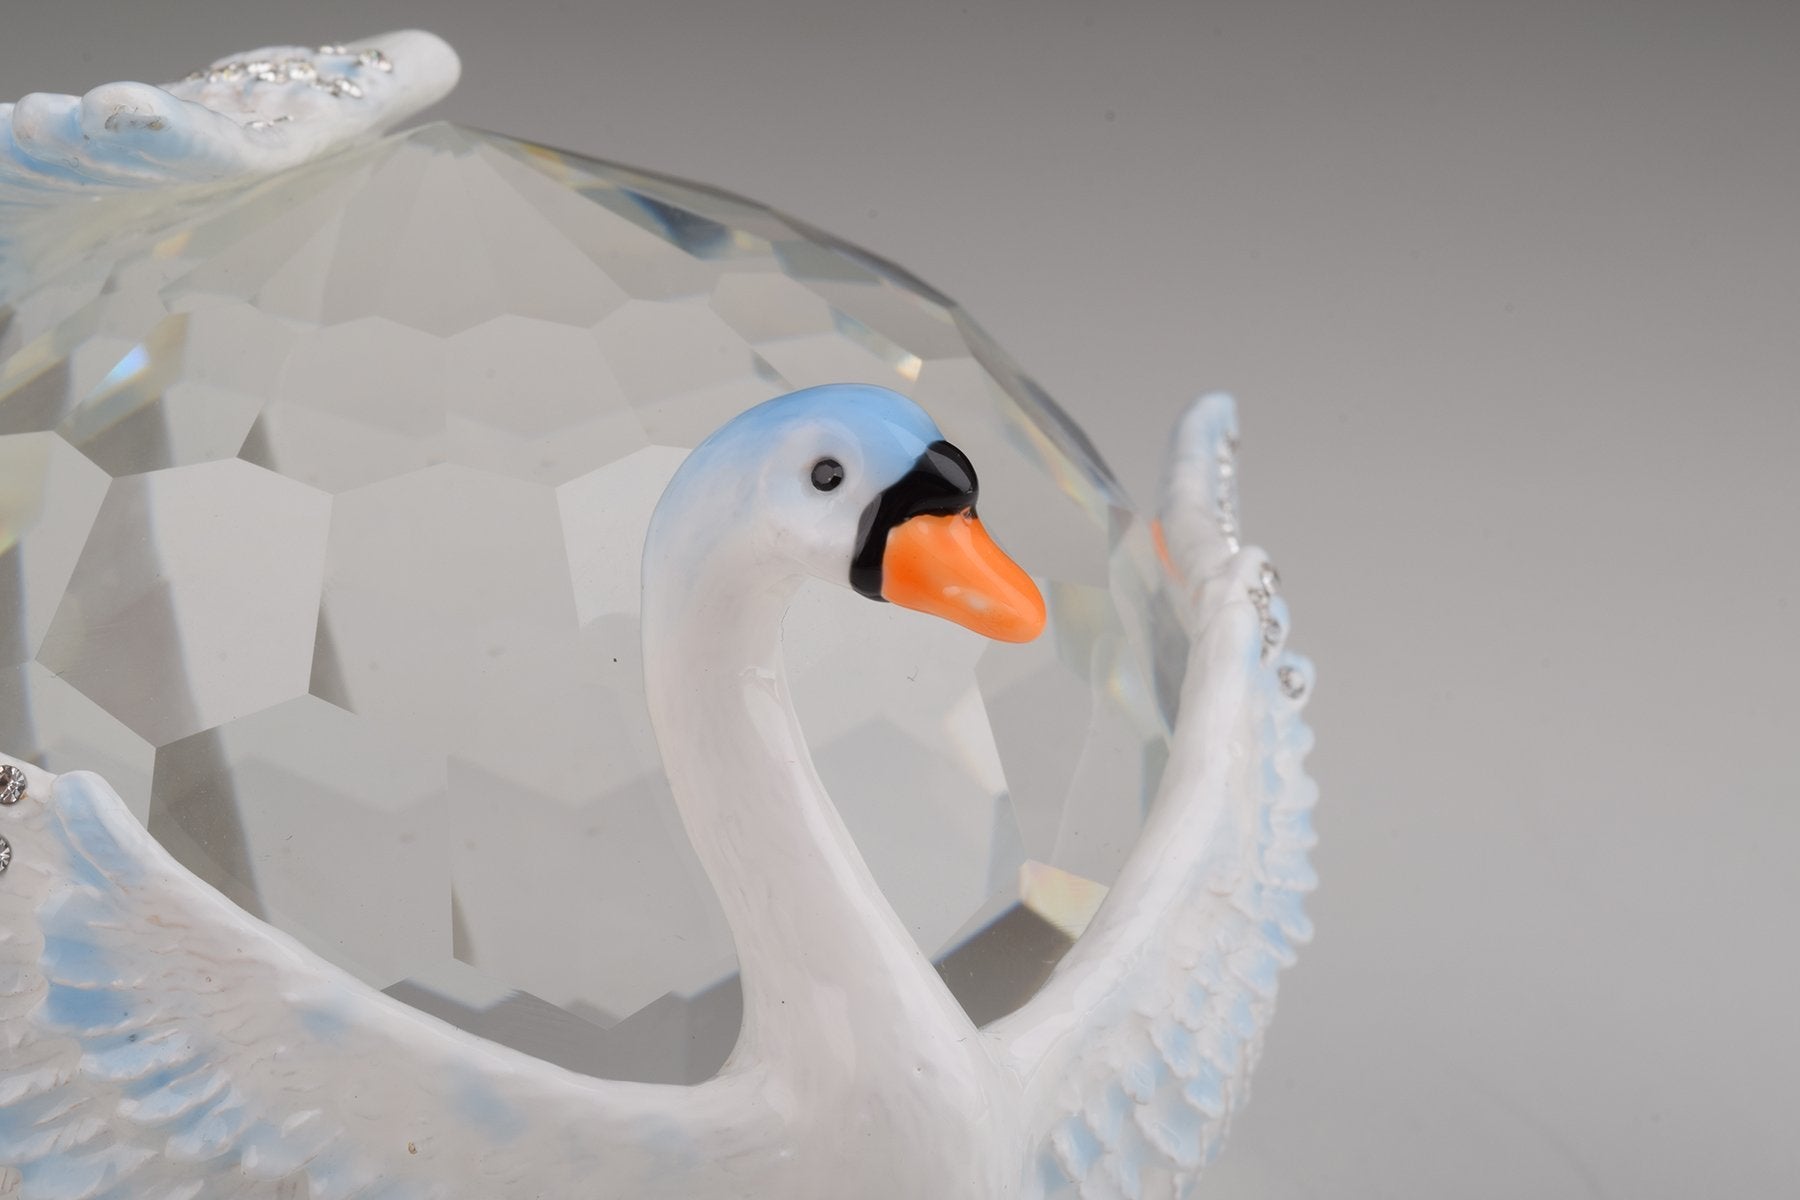 Keren Kopal Two White Swans on Crystal Ball trinket box 141.50